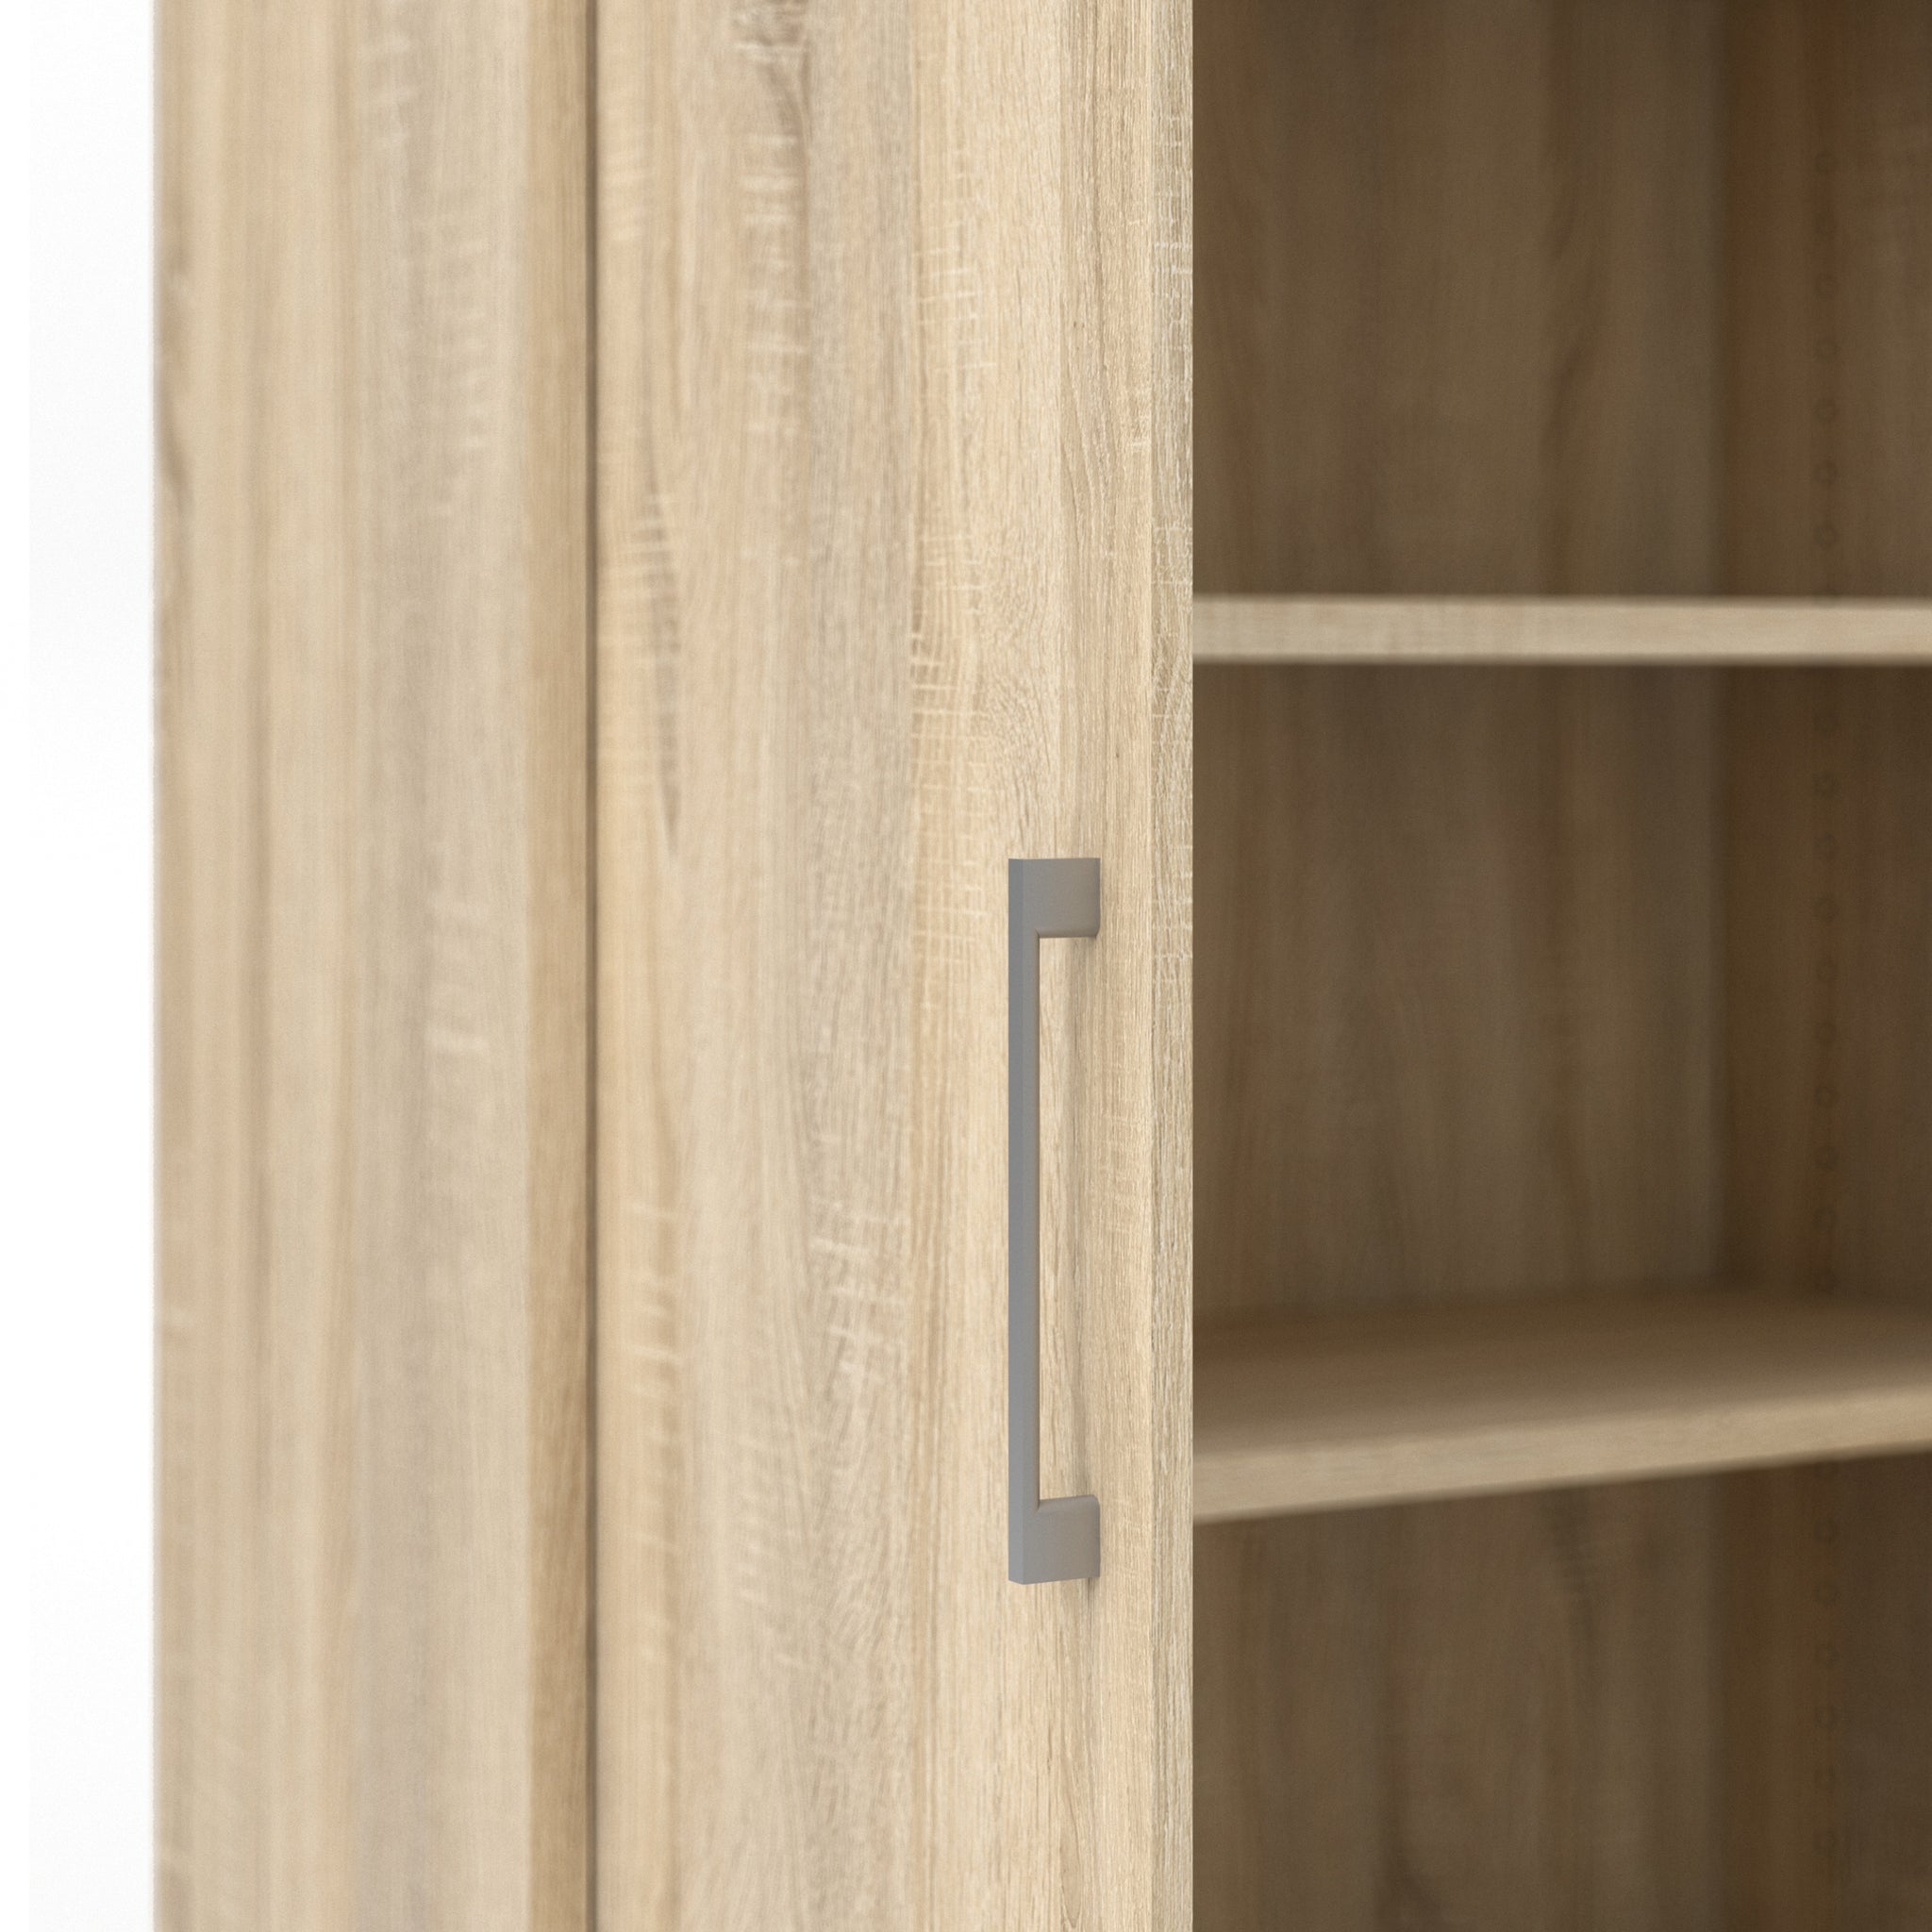 Prima Bookcase 3 Shelves with 2 Doors in Oak